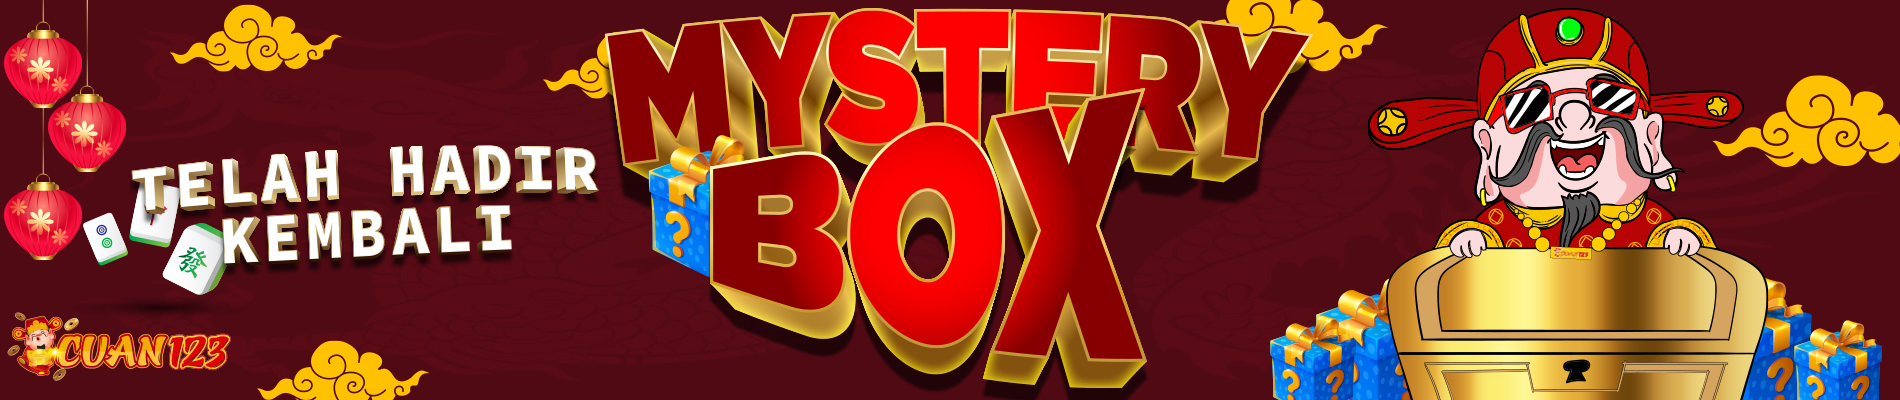 Mystery Box Cuan123 